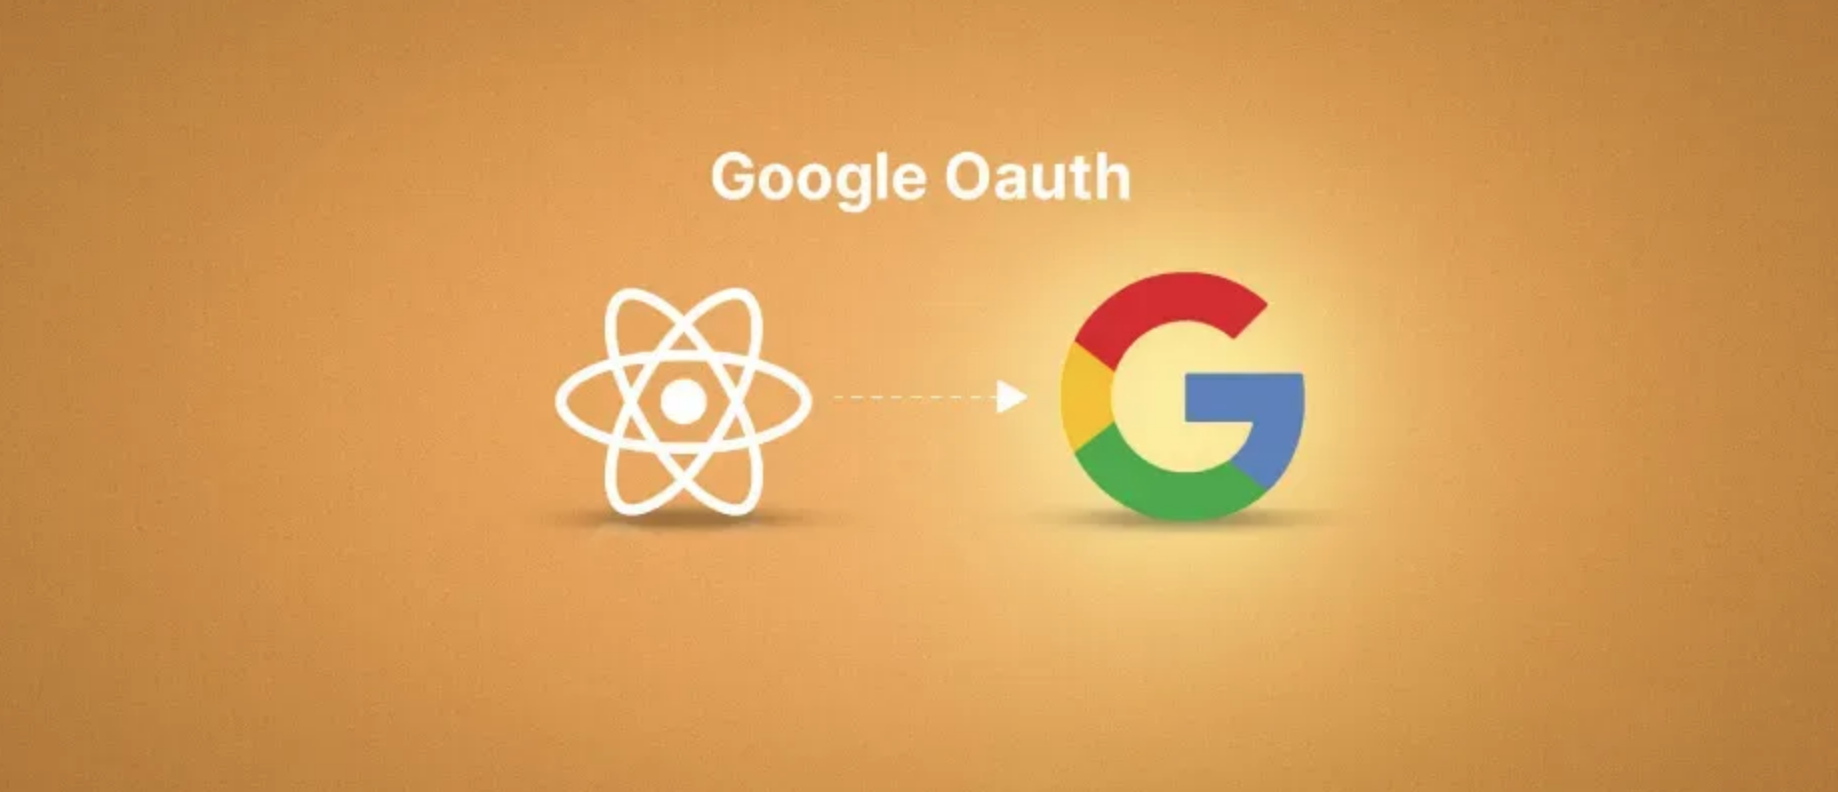 Google OAuth 2.0